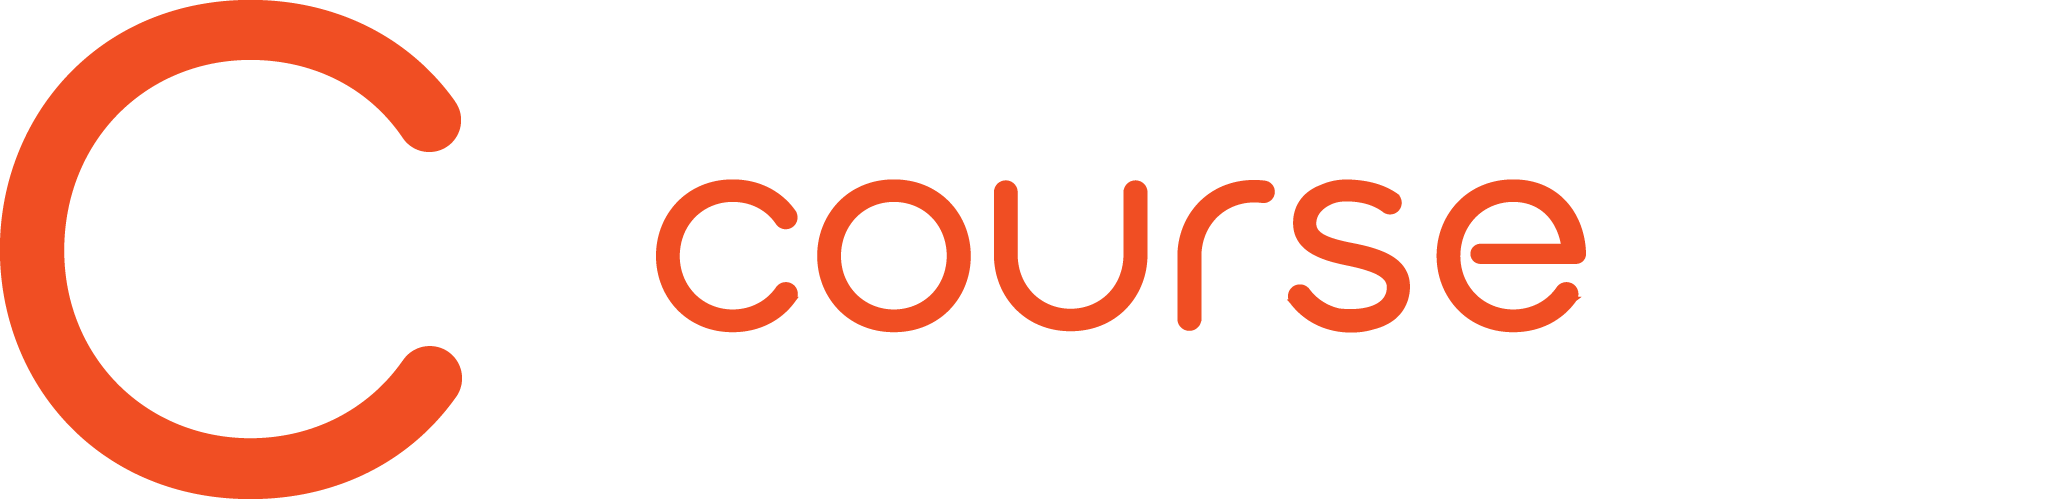 coursedot logo.png